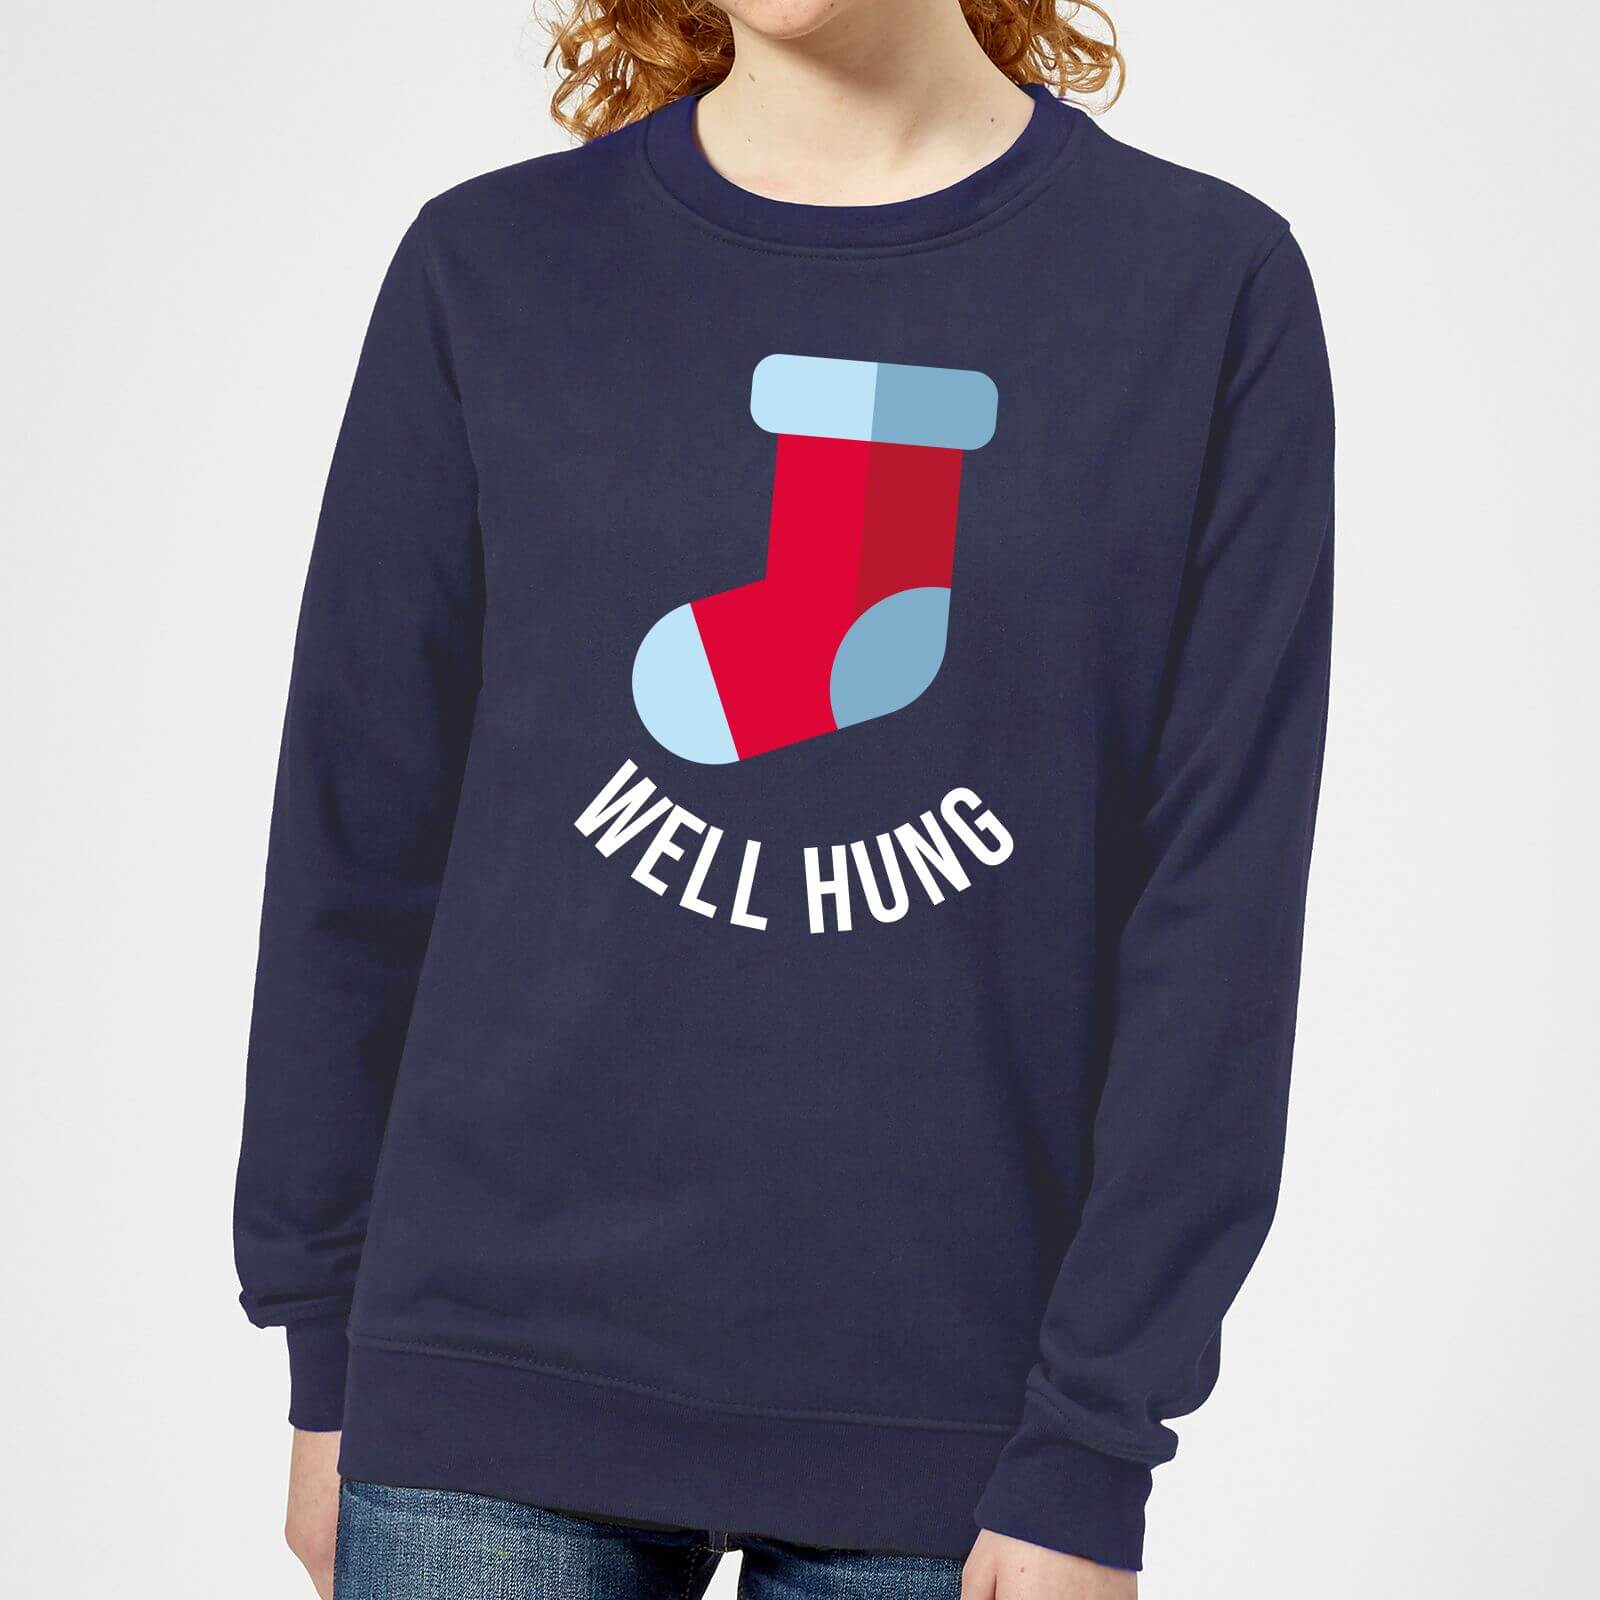 Well Hung Women's Christmas Sweatshirt - Navy - XS